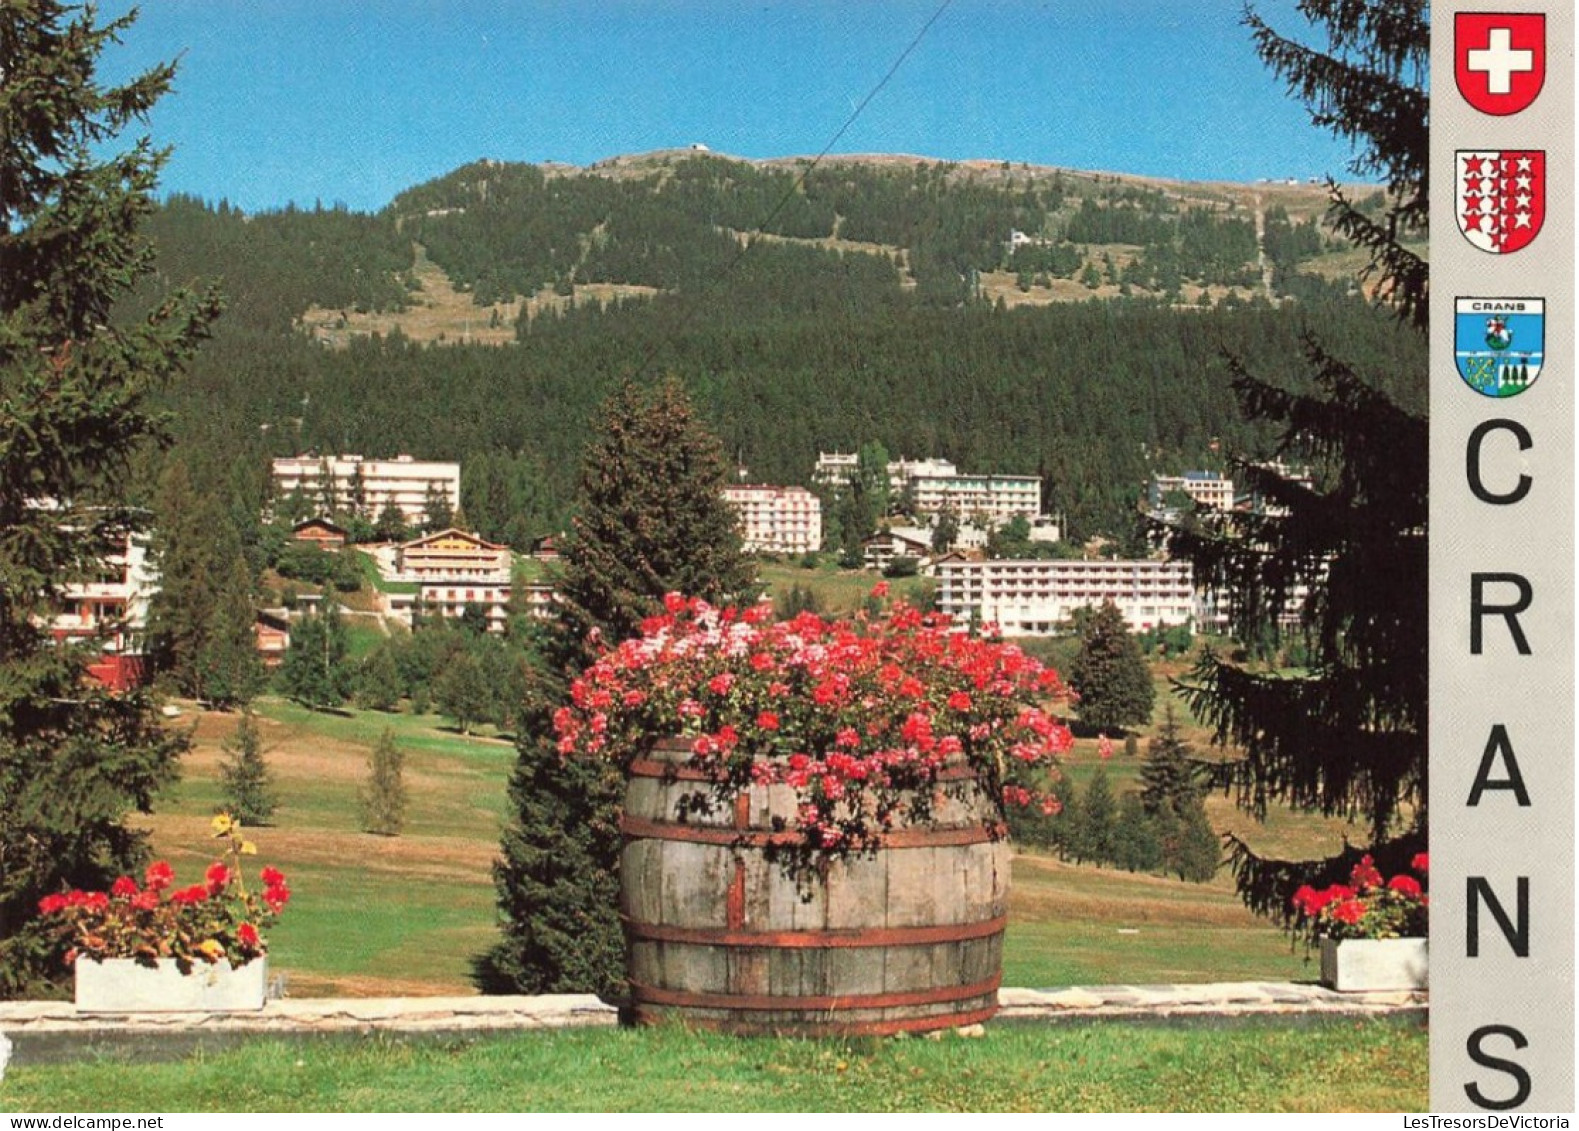 SUISSE - Suisse - Schweiz - Switzerland - Crans Montana - Alpes Valaisannes - Carte Postale - Sierre